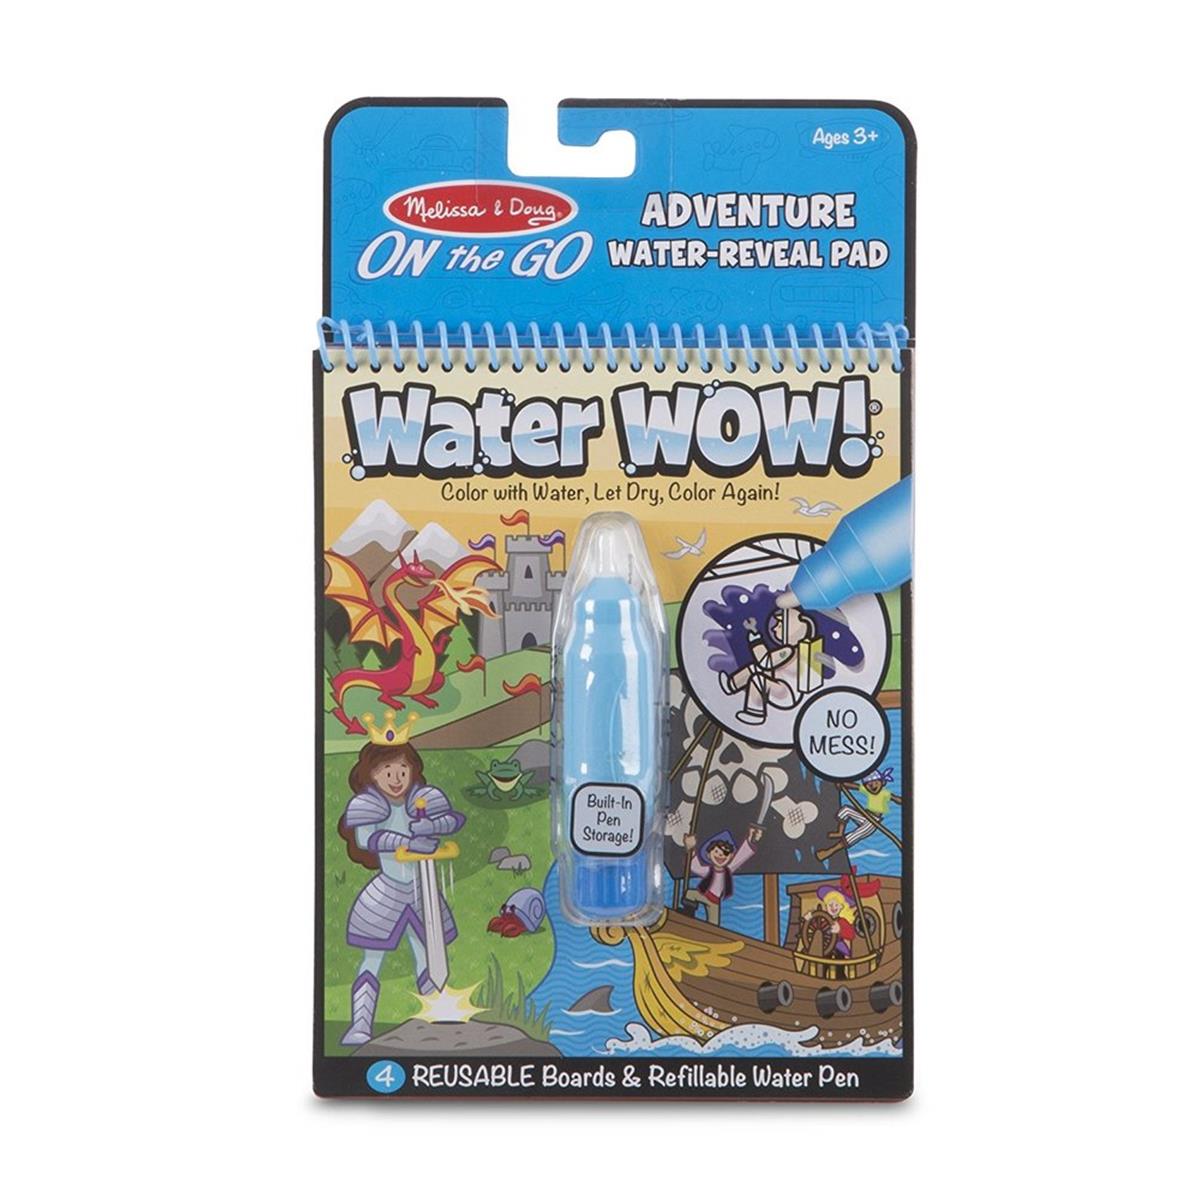 160860 Water Wow Adventure Activity Book